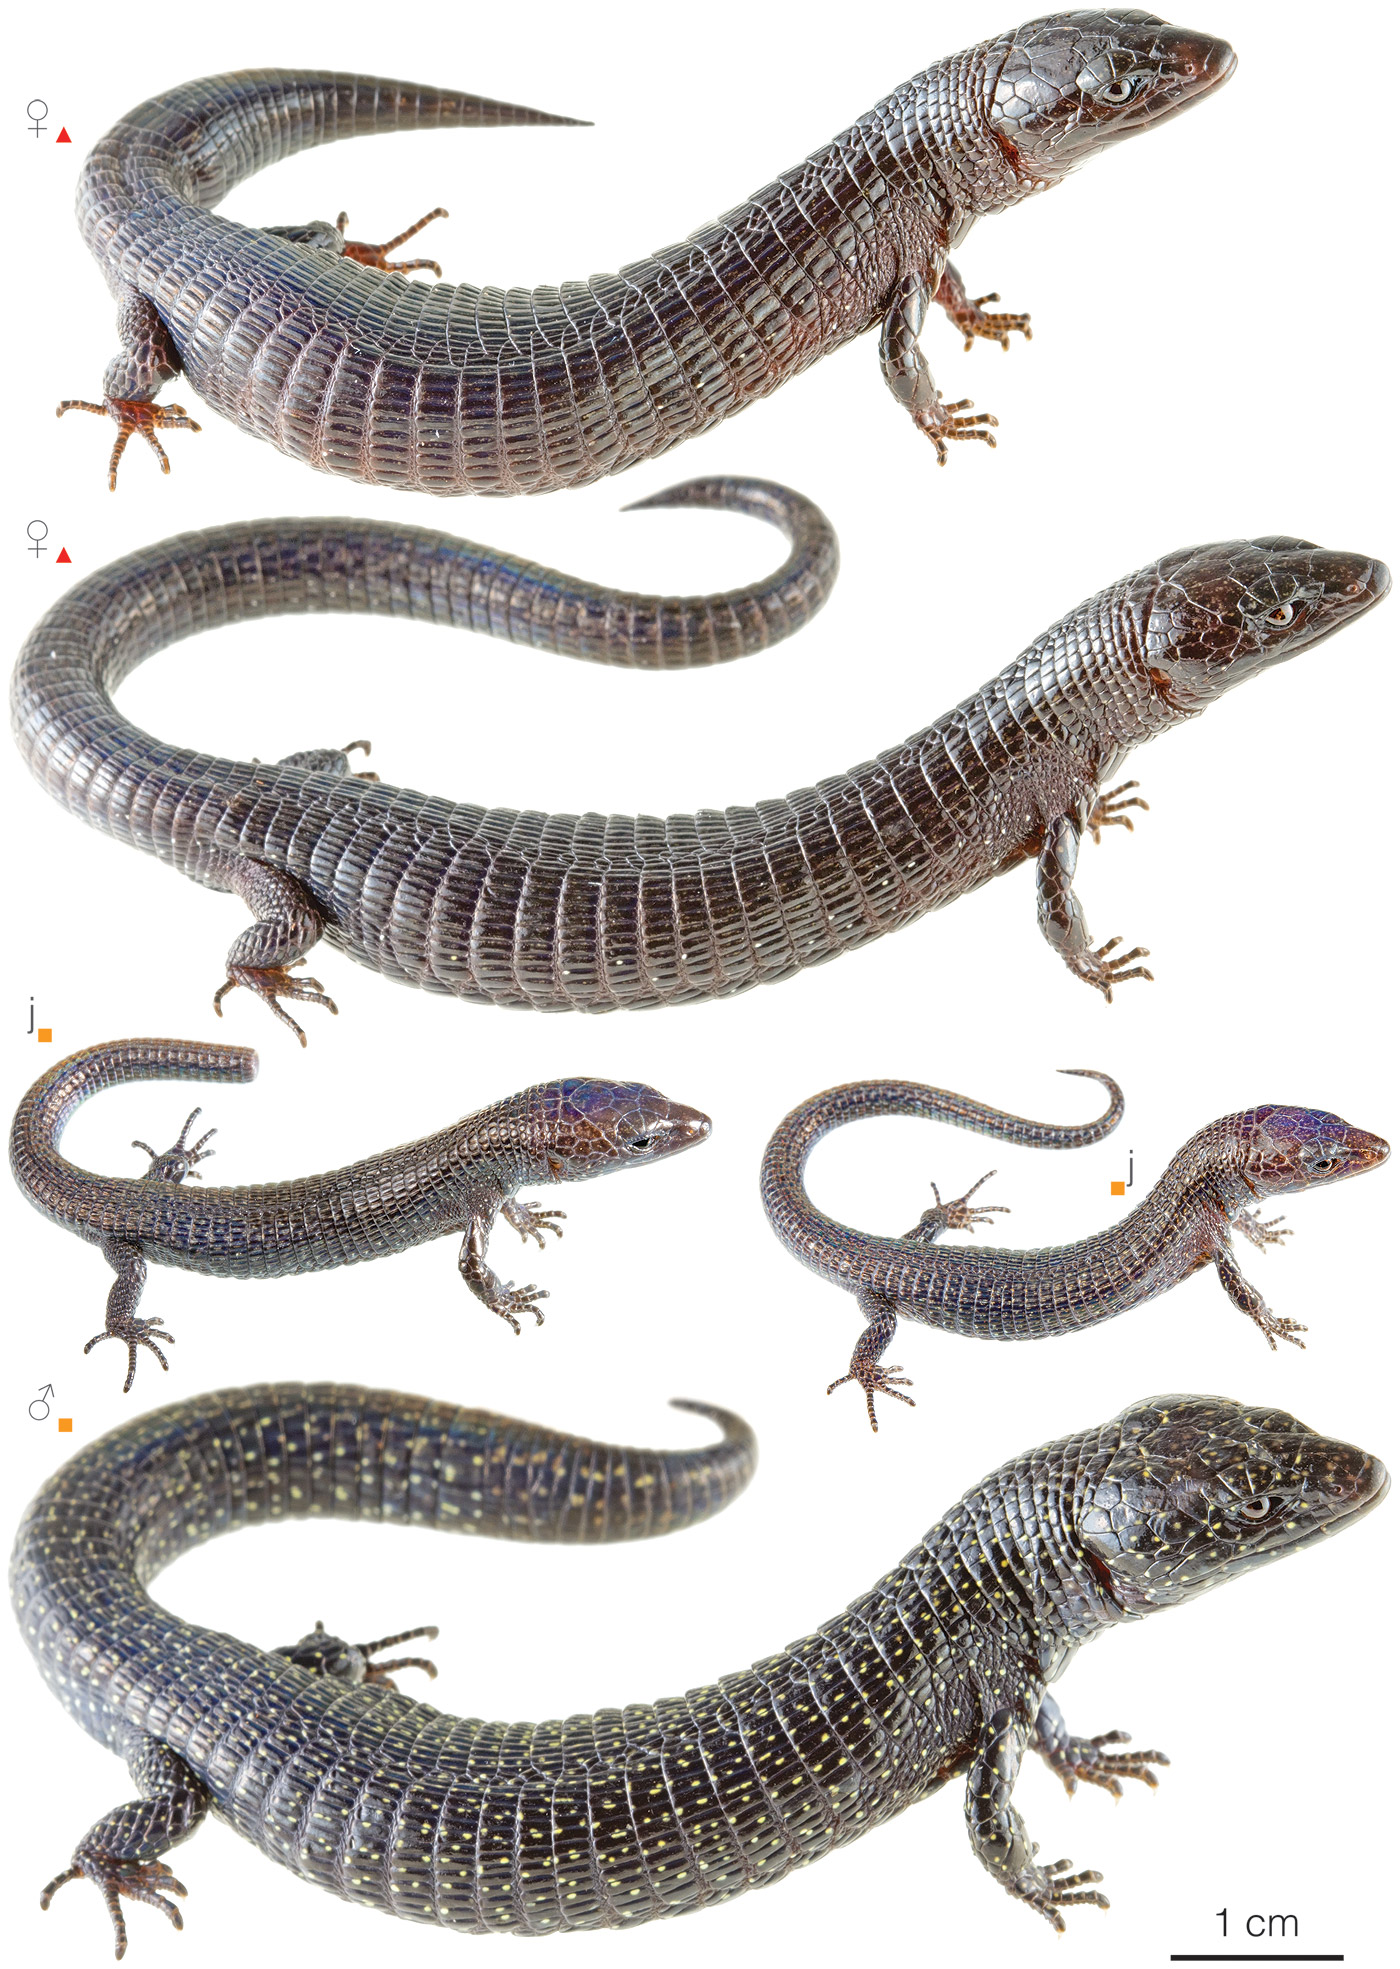 Variation among individuals of Riama meleagris